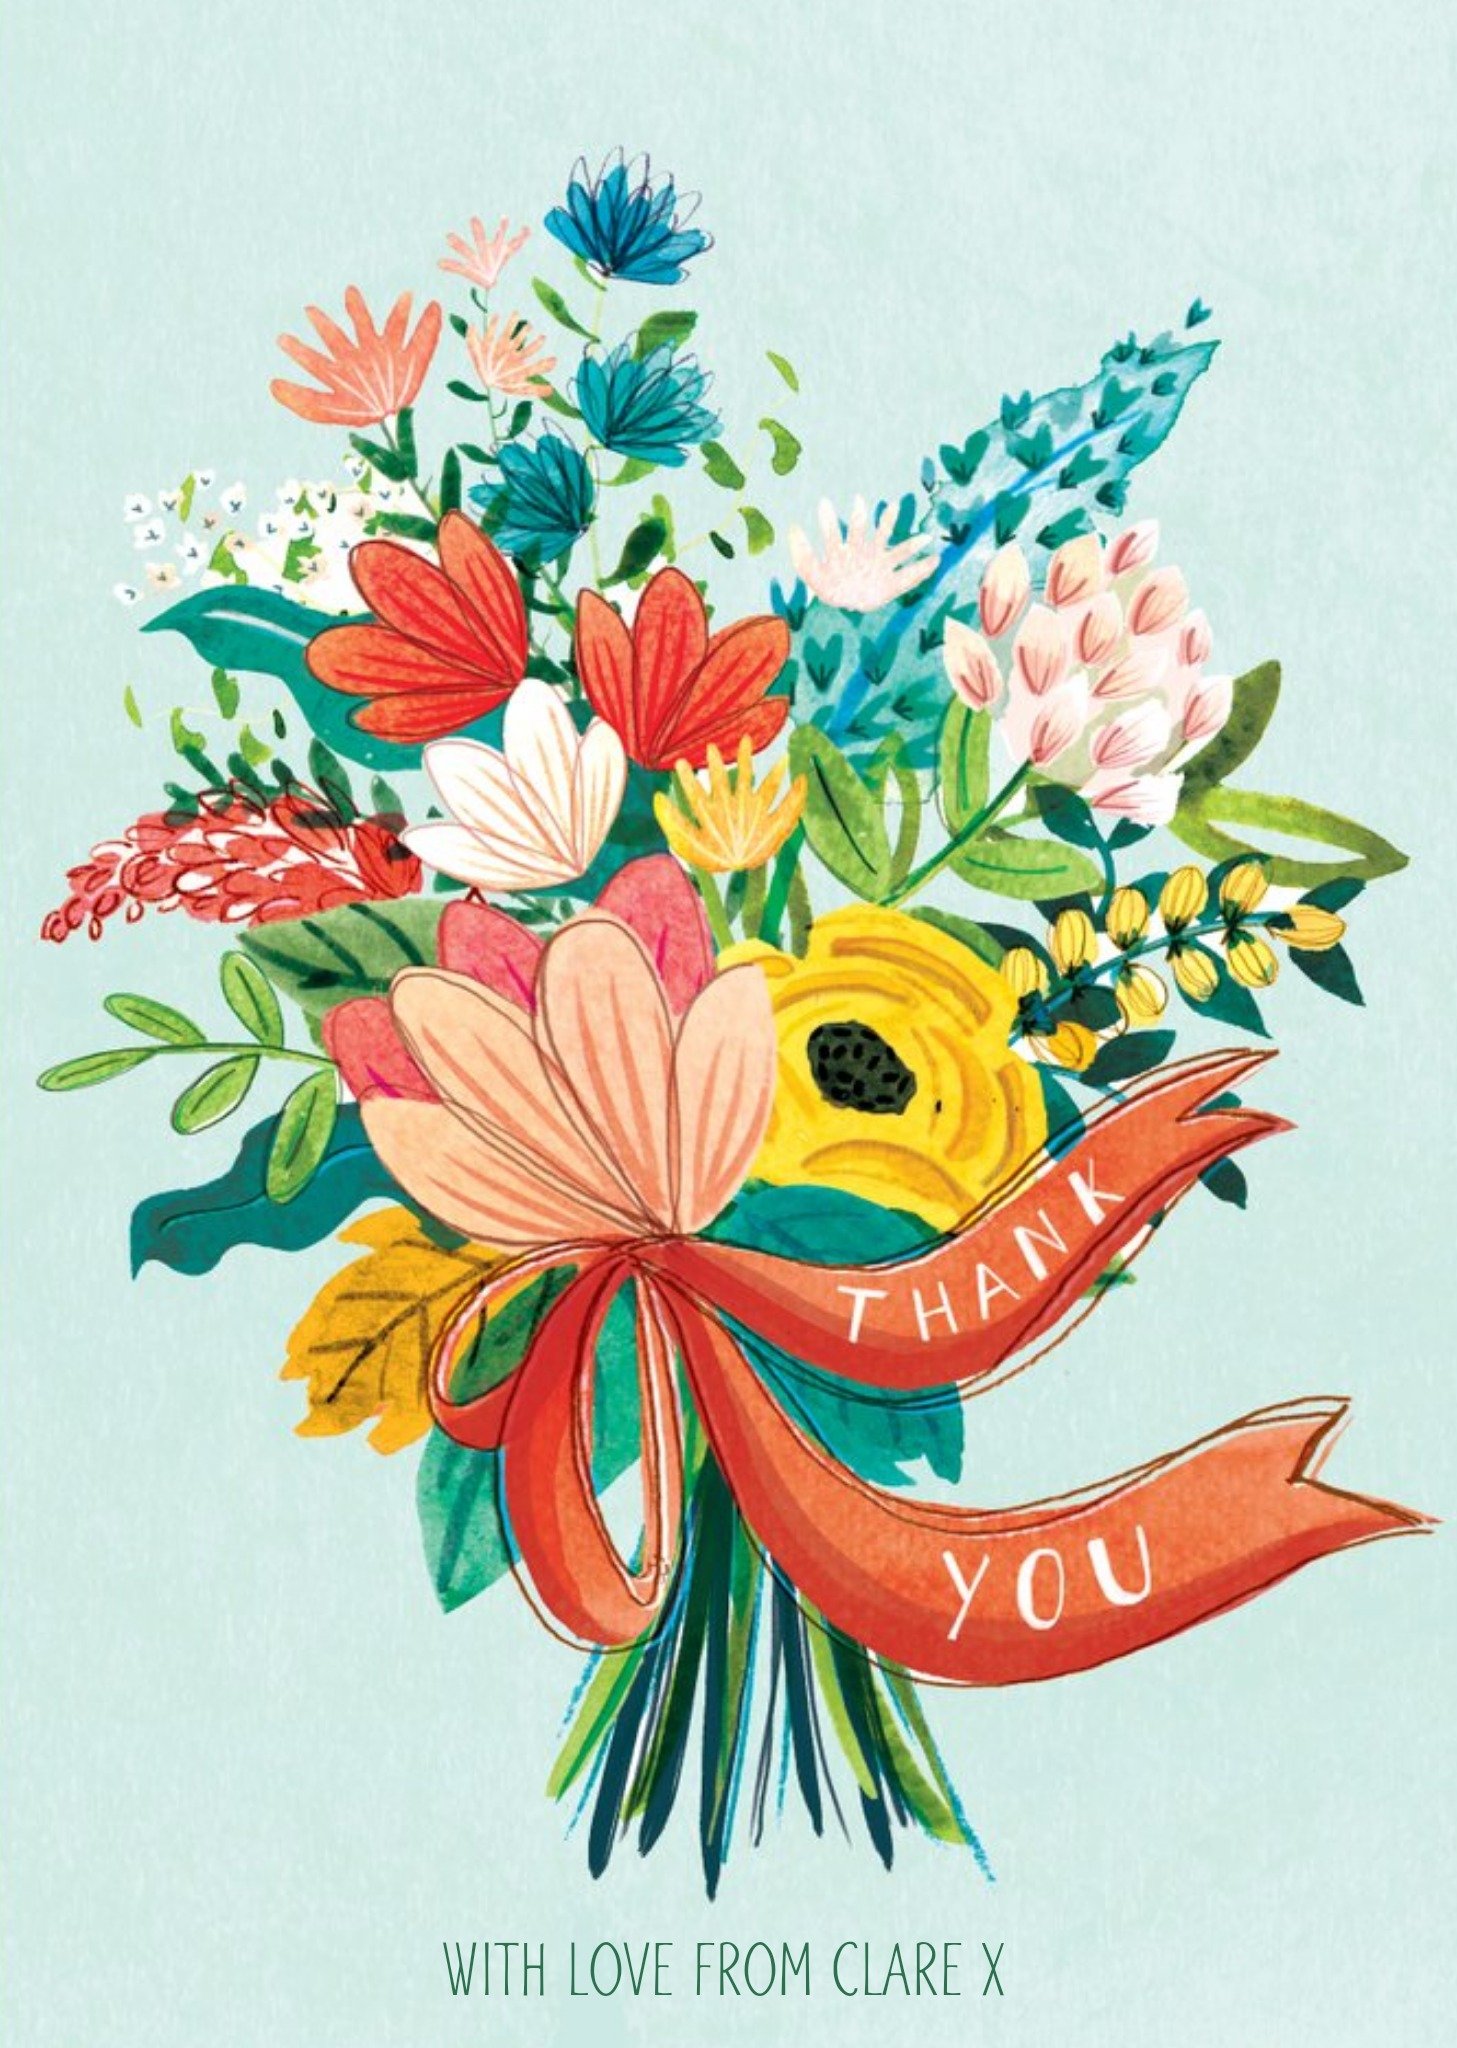 Moonpig Flower Bouquet Illustration - Thank You. Editable Text Below Image. Postcard